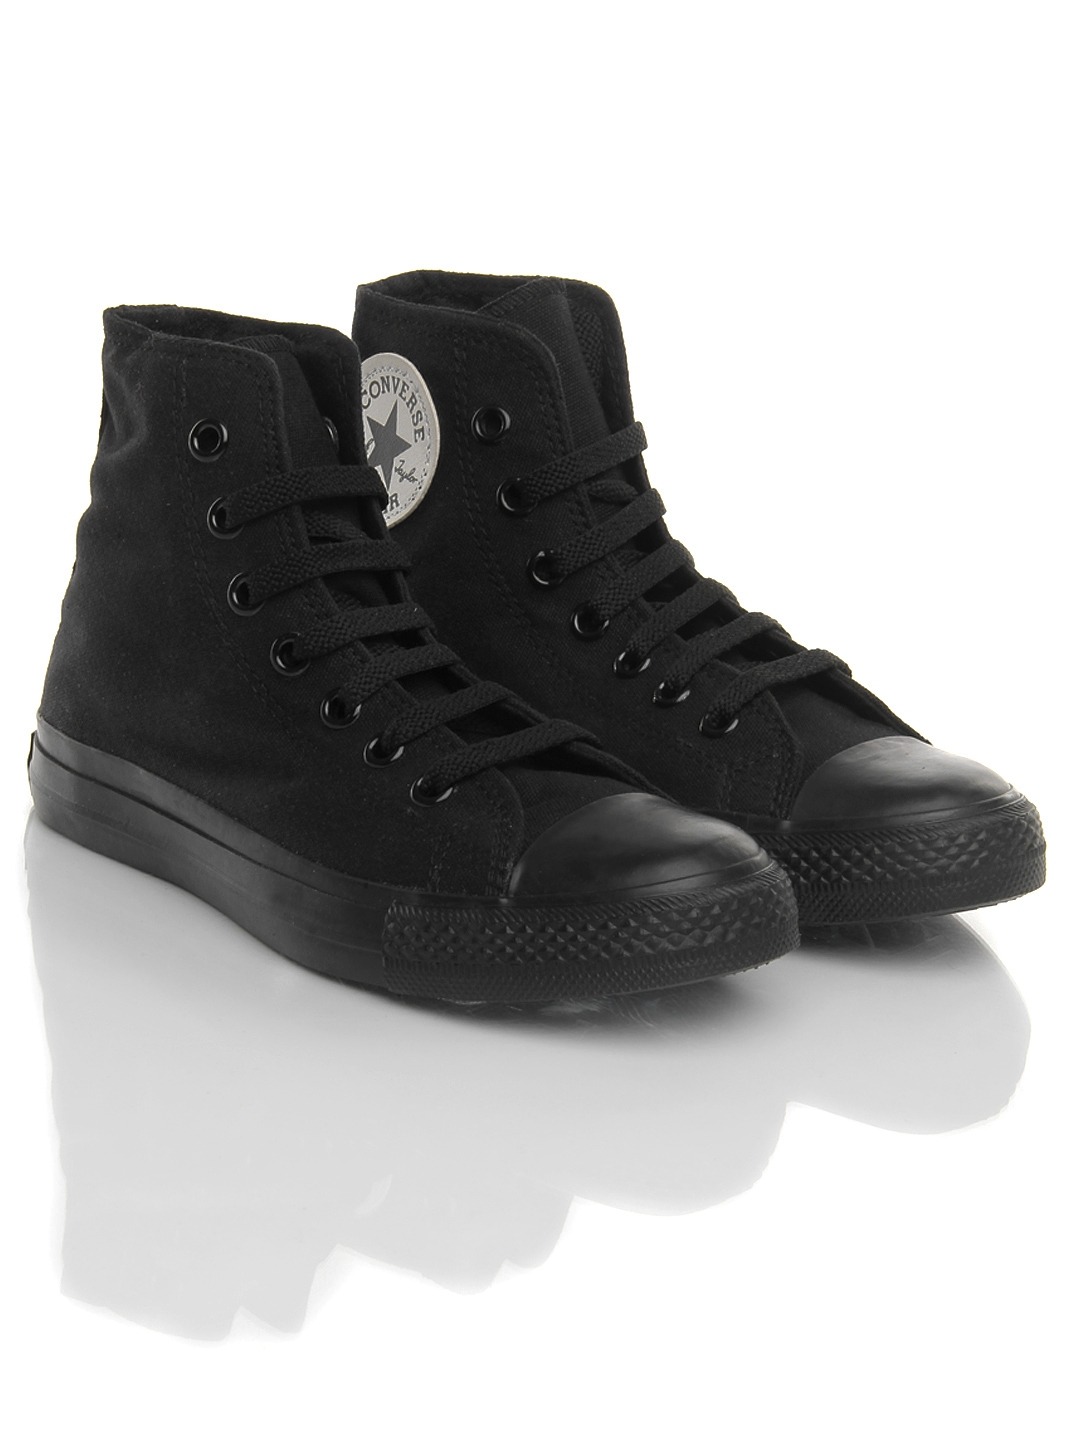 Amazon.com | Converse Men's One Star Pro Ox, Black/Black/White, Size 8.5 |  Fashion Sneakers